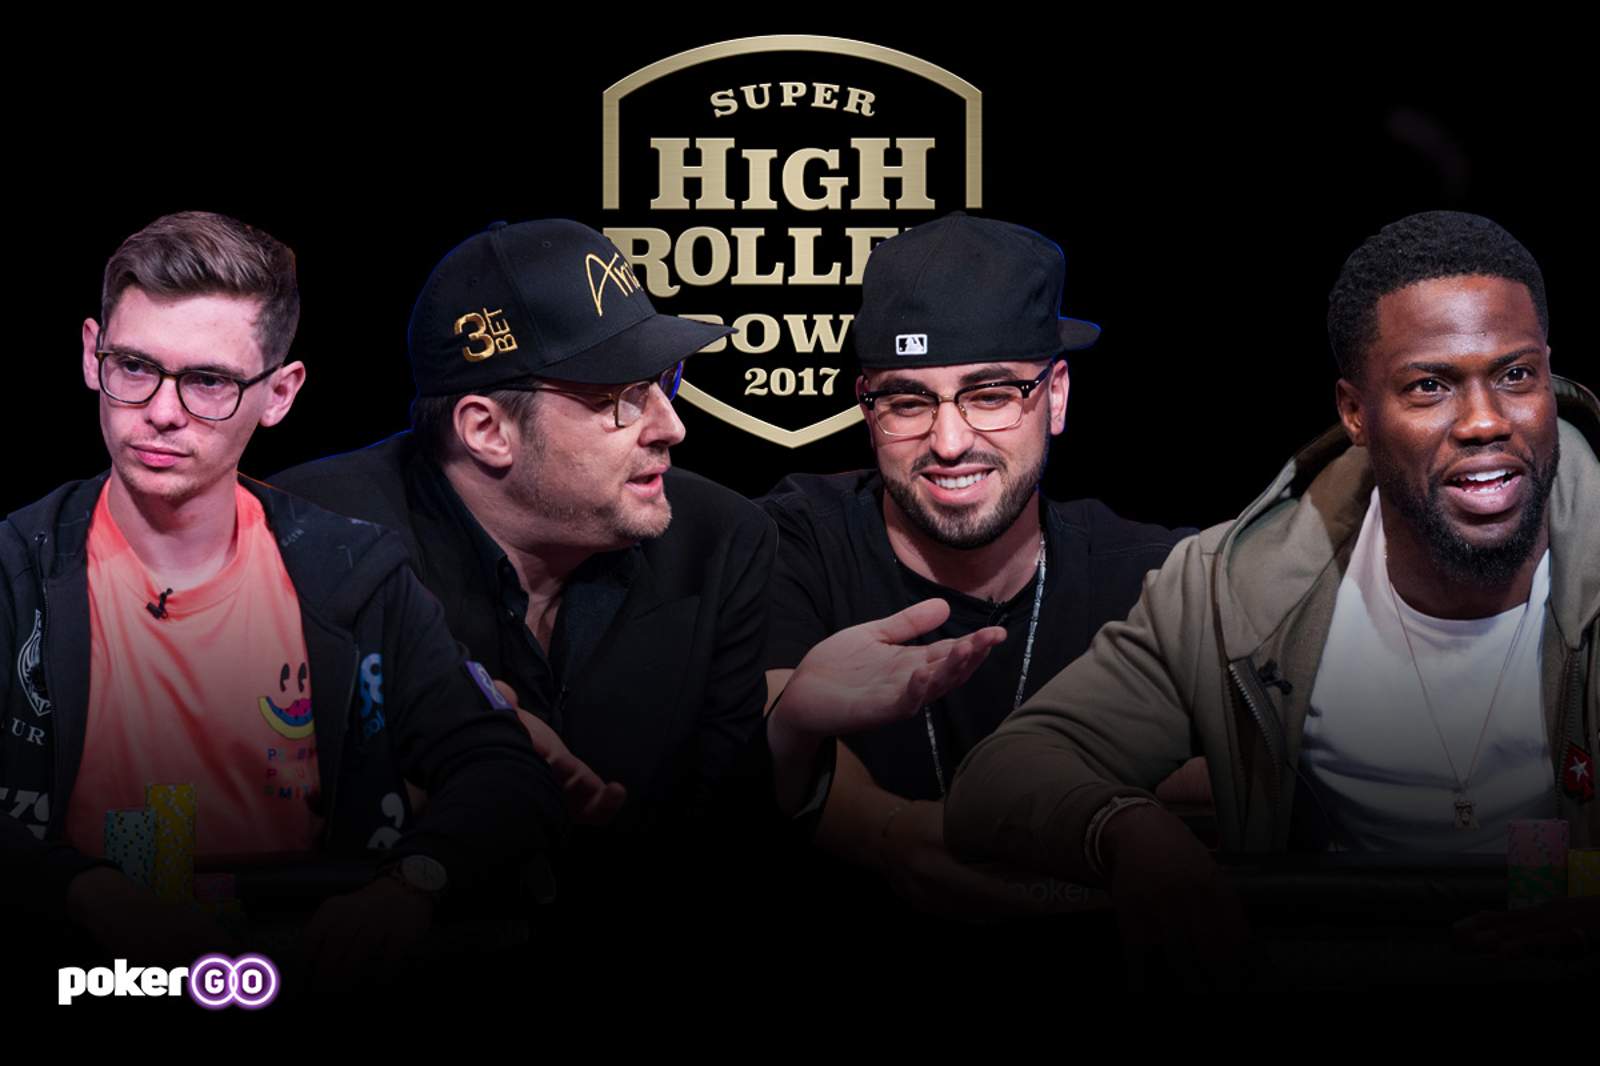 Kevin Hart Headlines 2017 Super High Roller Bowl on PokerGO